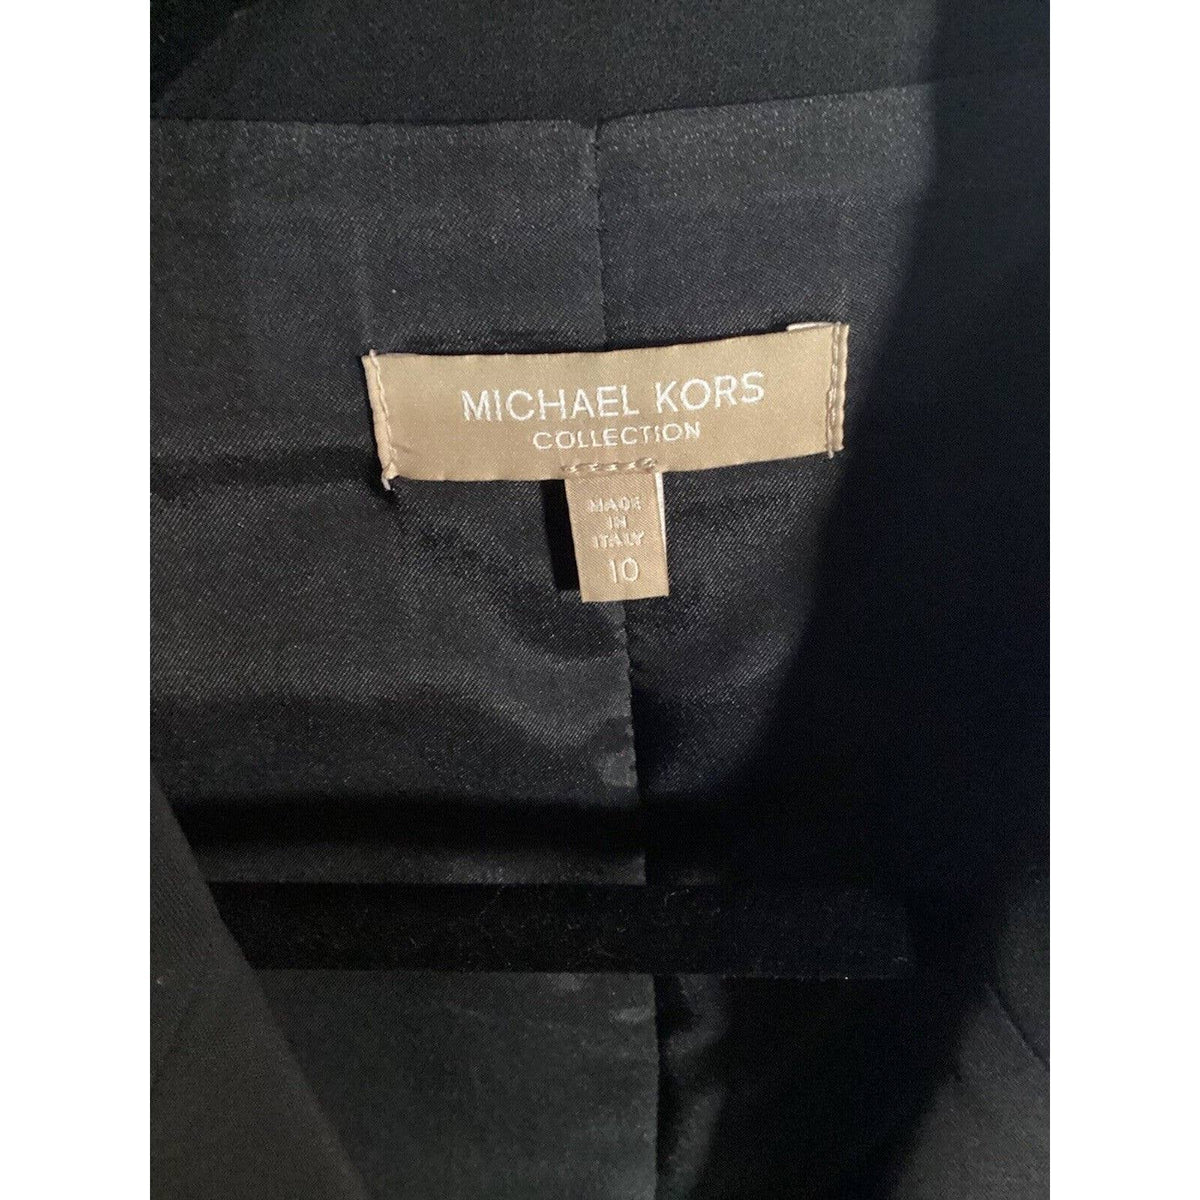 Michael Kors Collection 100% Virgin Wool Black Vest Sz.10